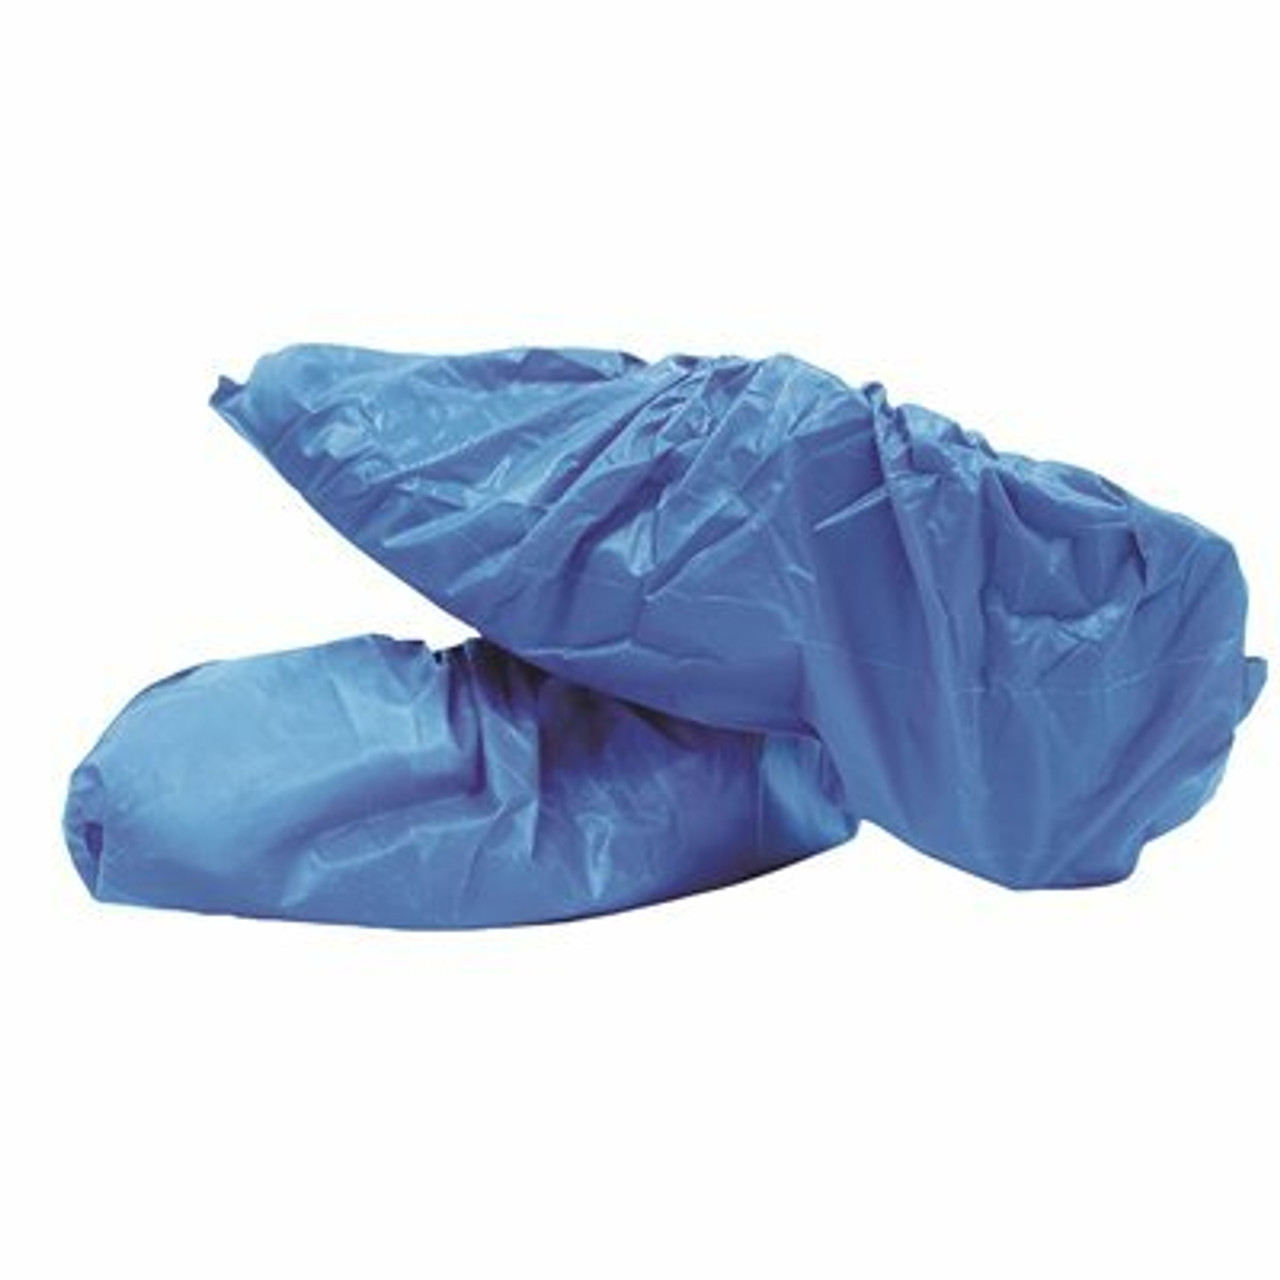 Trimaco Supertuff 9 Mil Cpe Disposable Shoe Covers (50/Case)